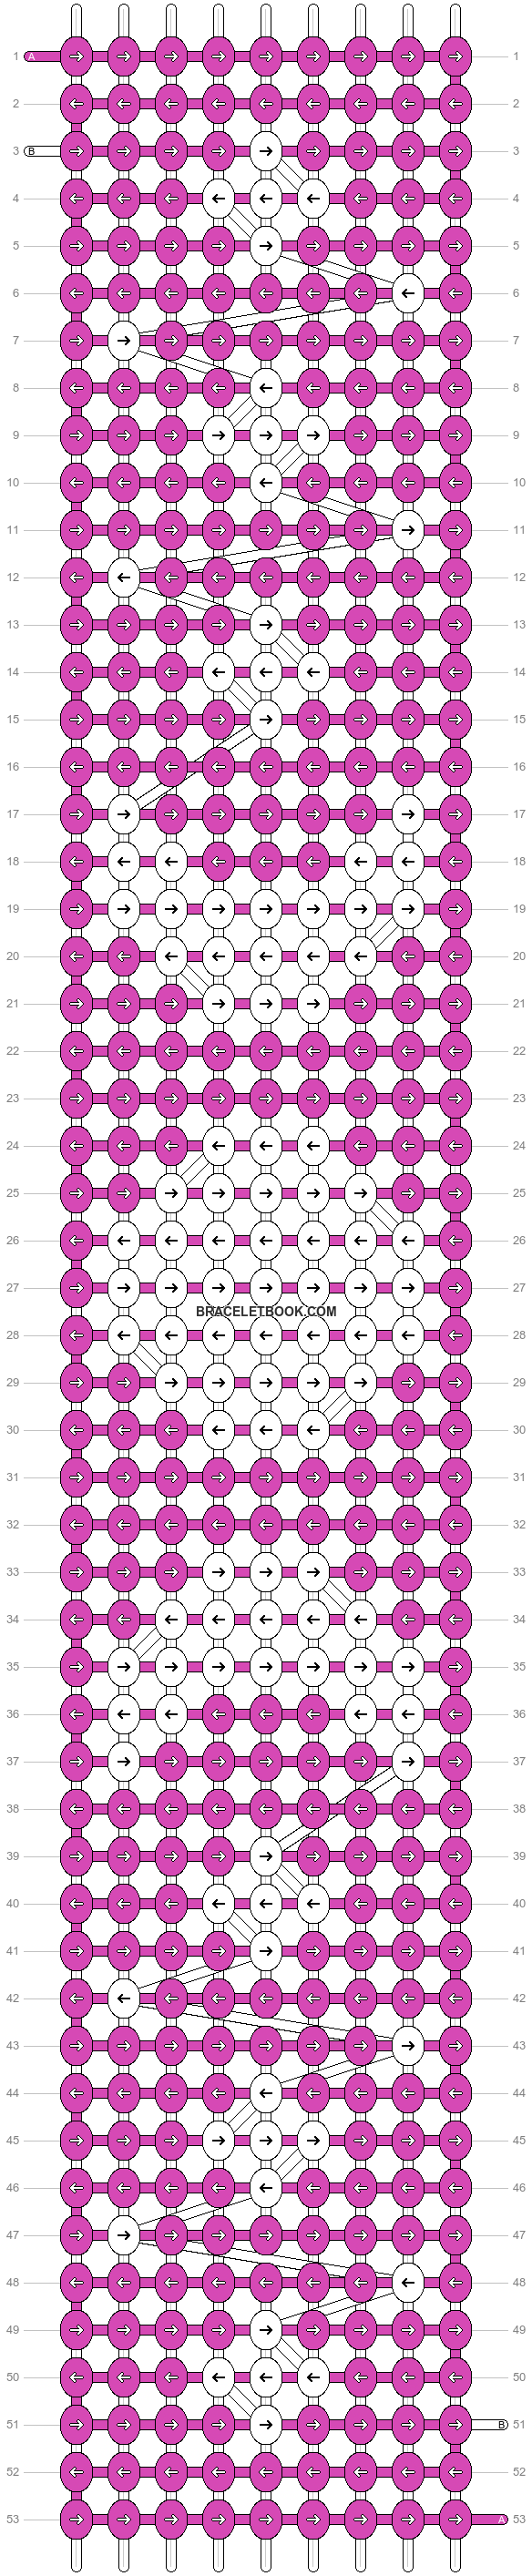 Alpha pattern #60782 variation #108701 pattern